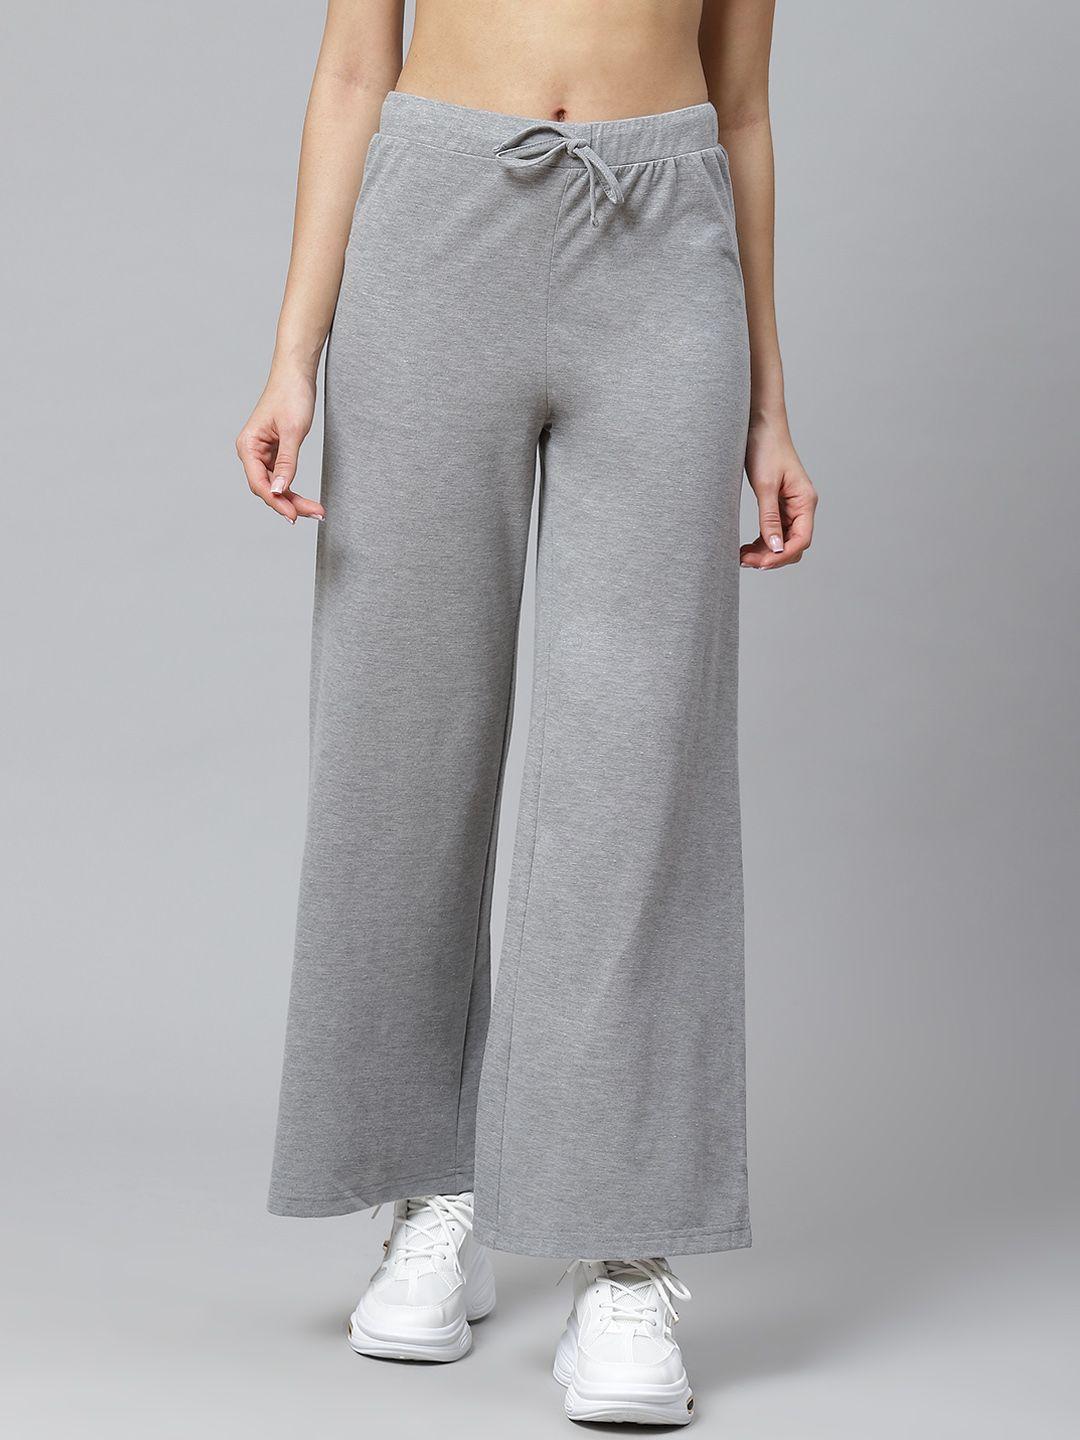 hubberholme women grey melange solid knitted track pants